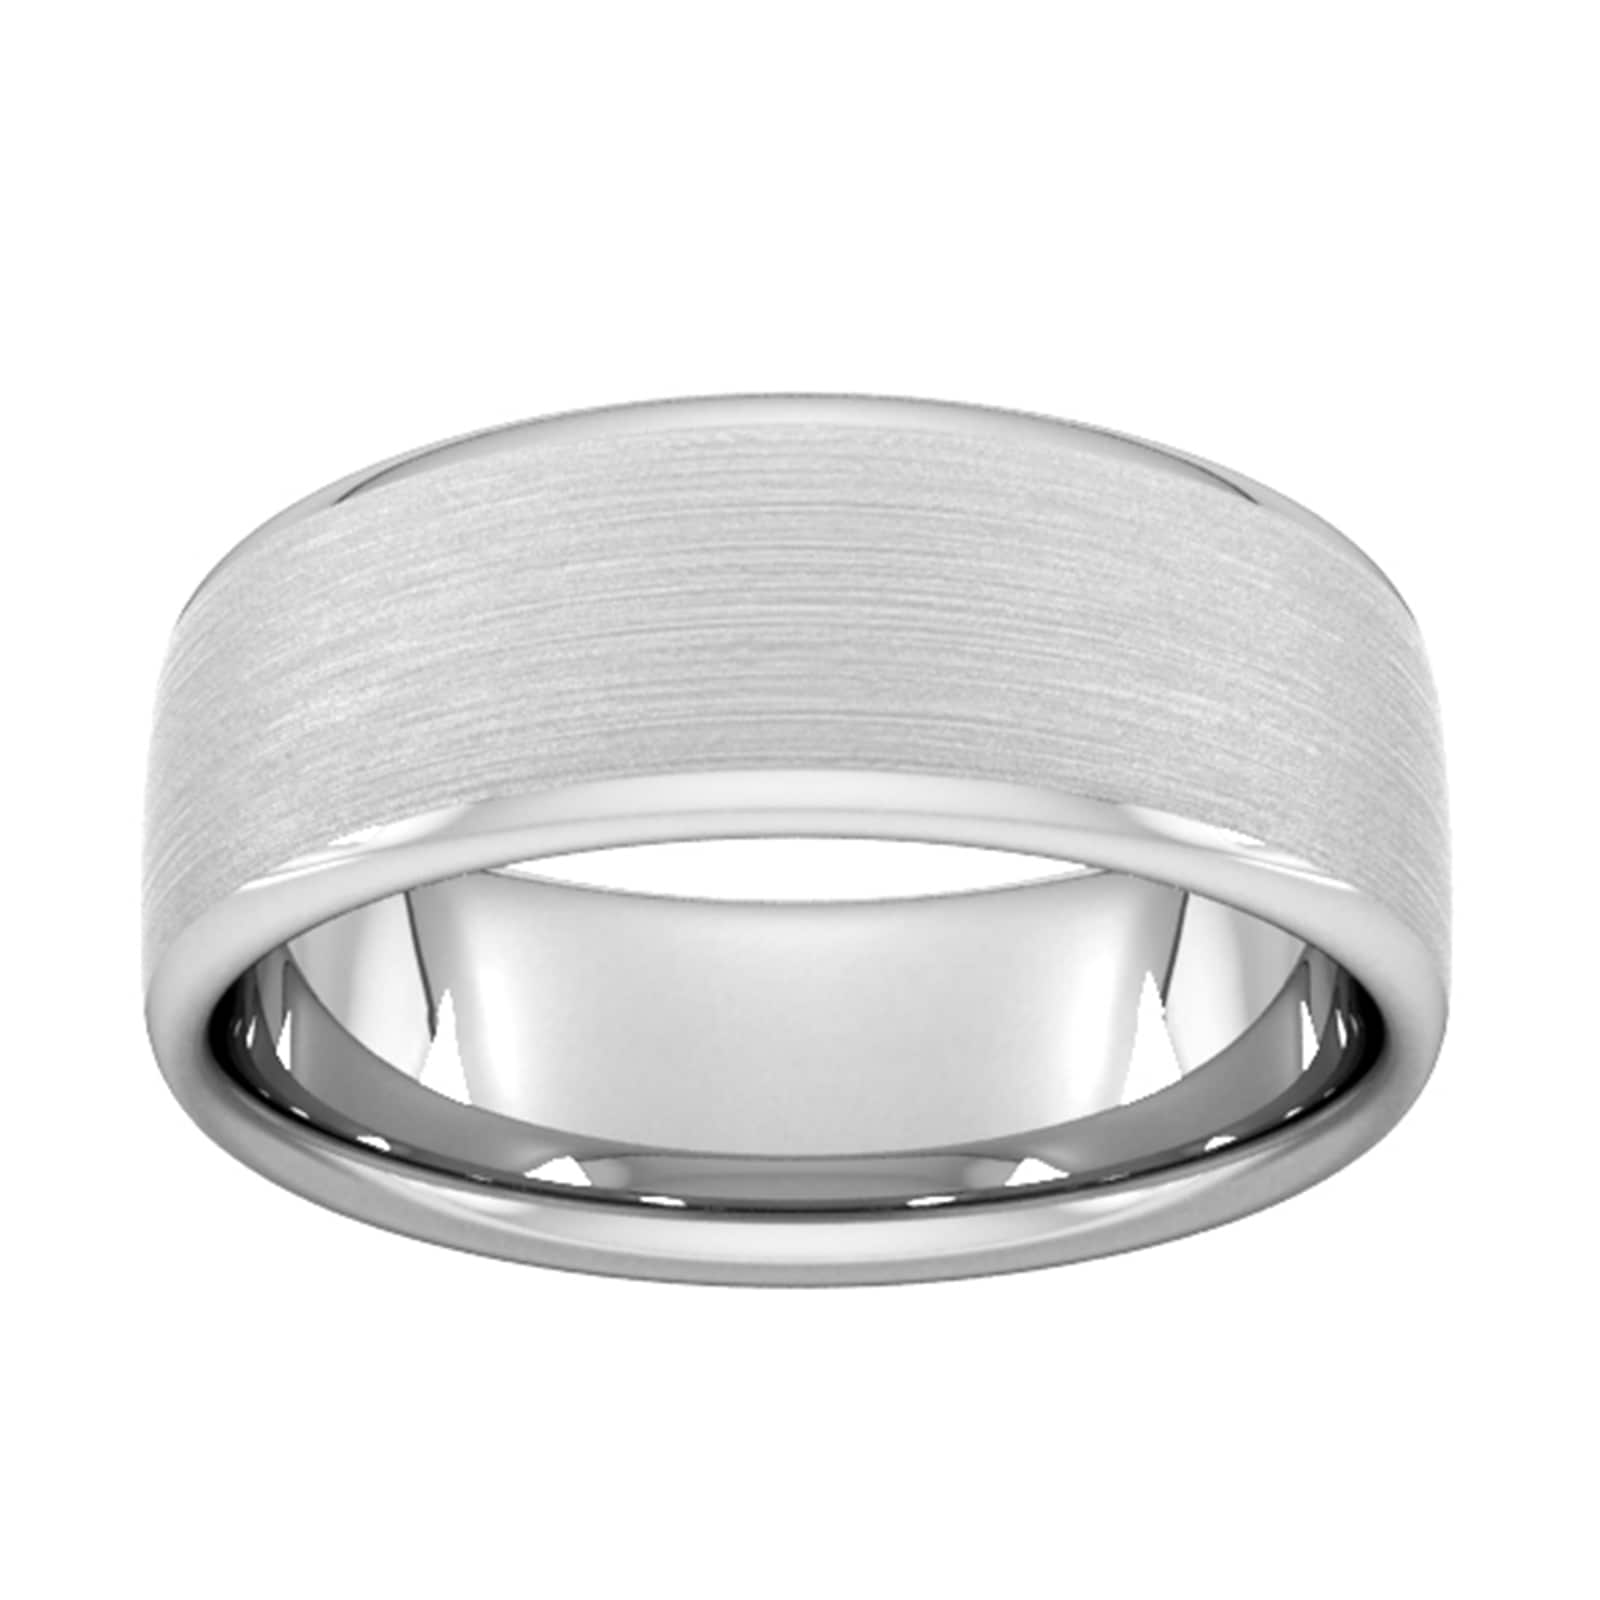 8mm D Shape Standard Matt Finished Wedding Ring In Platinum - Ring Size M